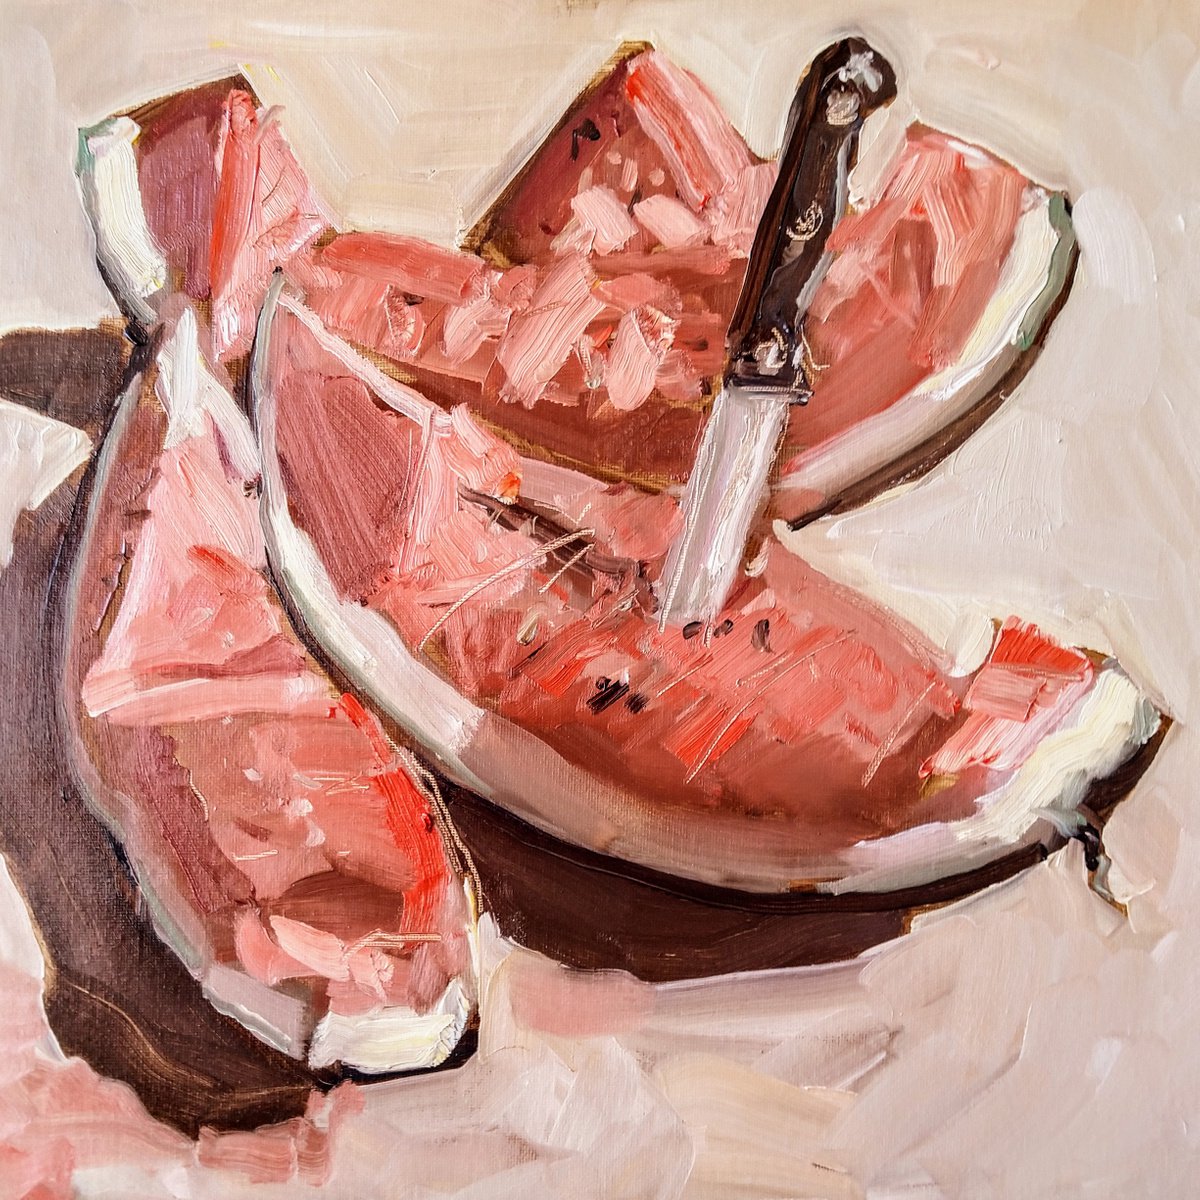 Watermelon and knife by Sebastian Beianu